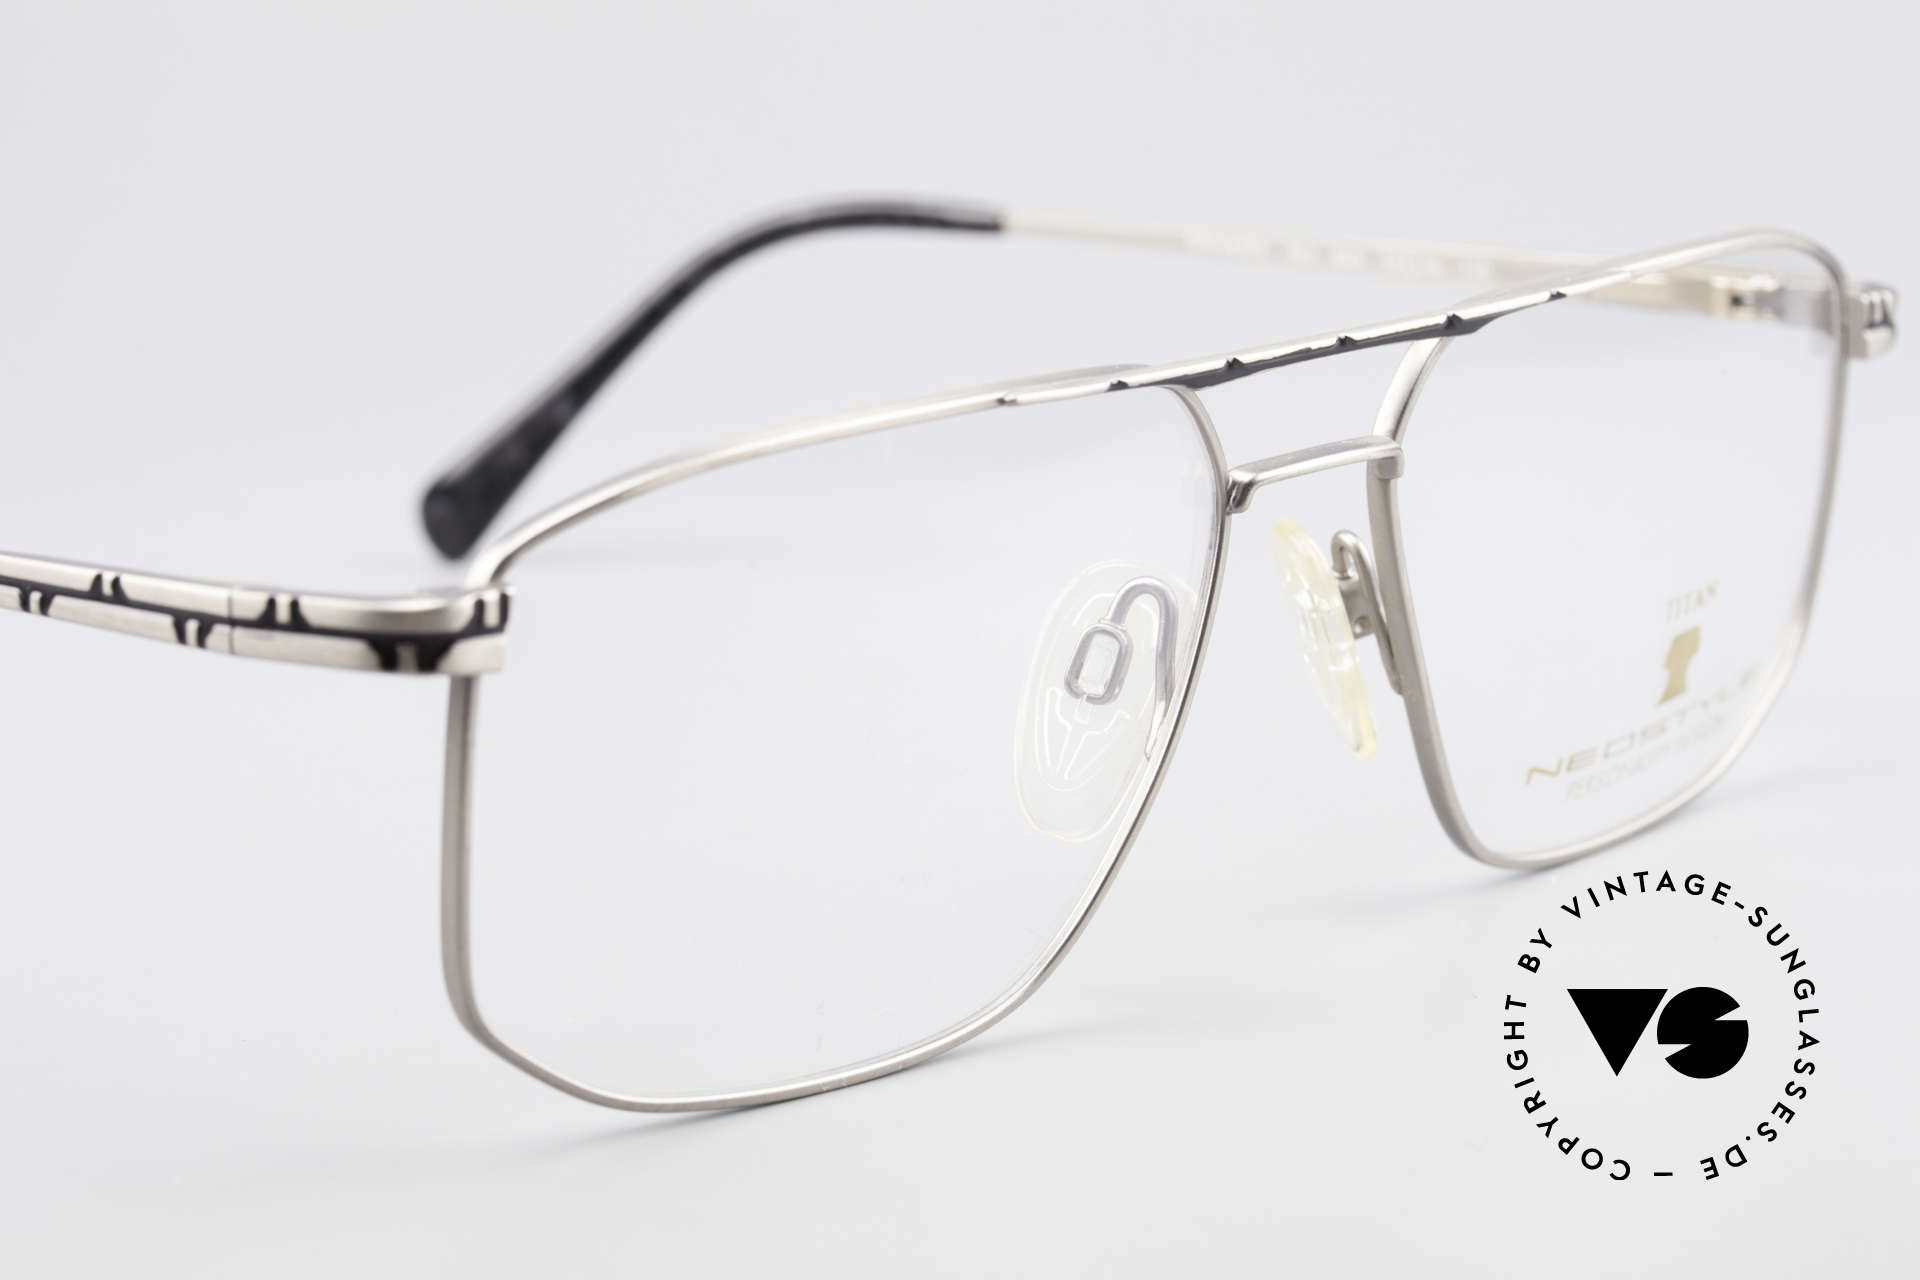 Neostyle Dynasty 362 XL Titanium Eyeglasses Men, Size: extra large, Made for Men